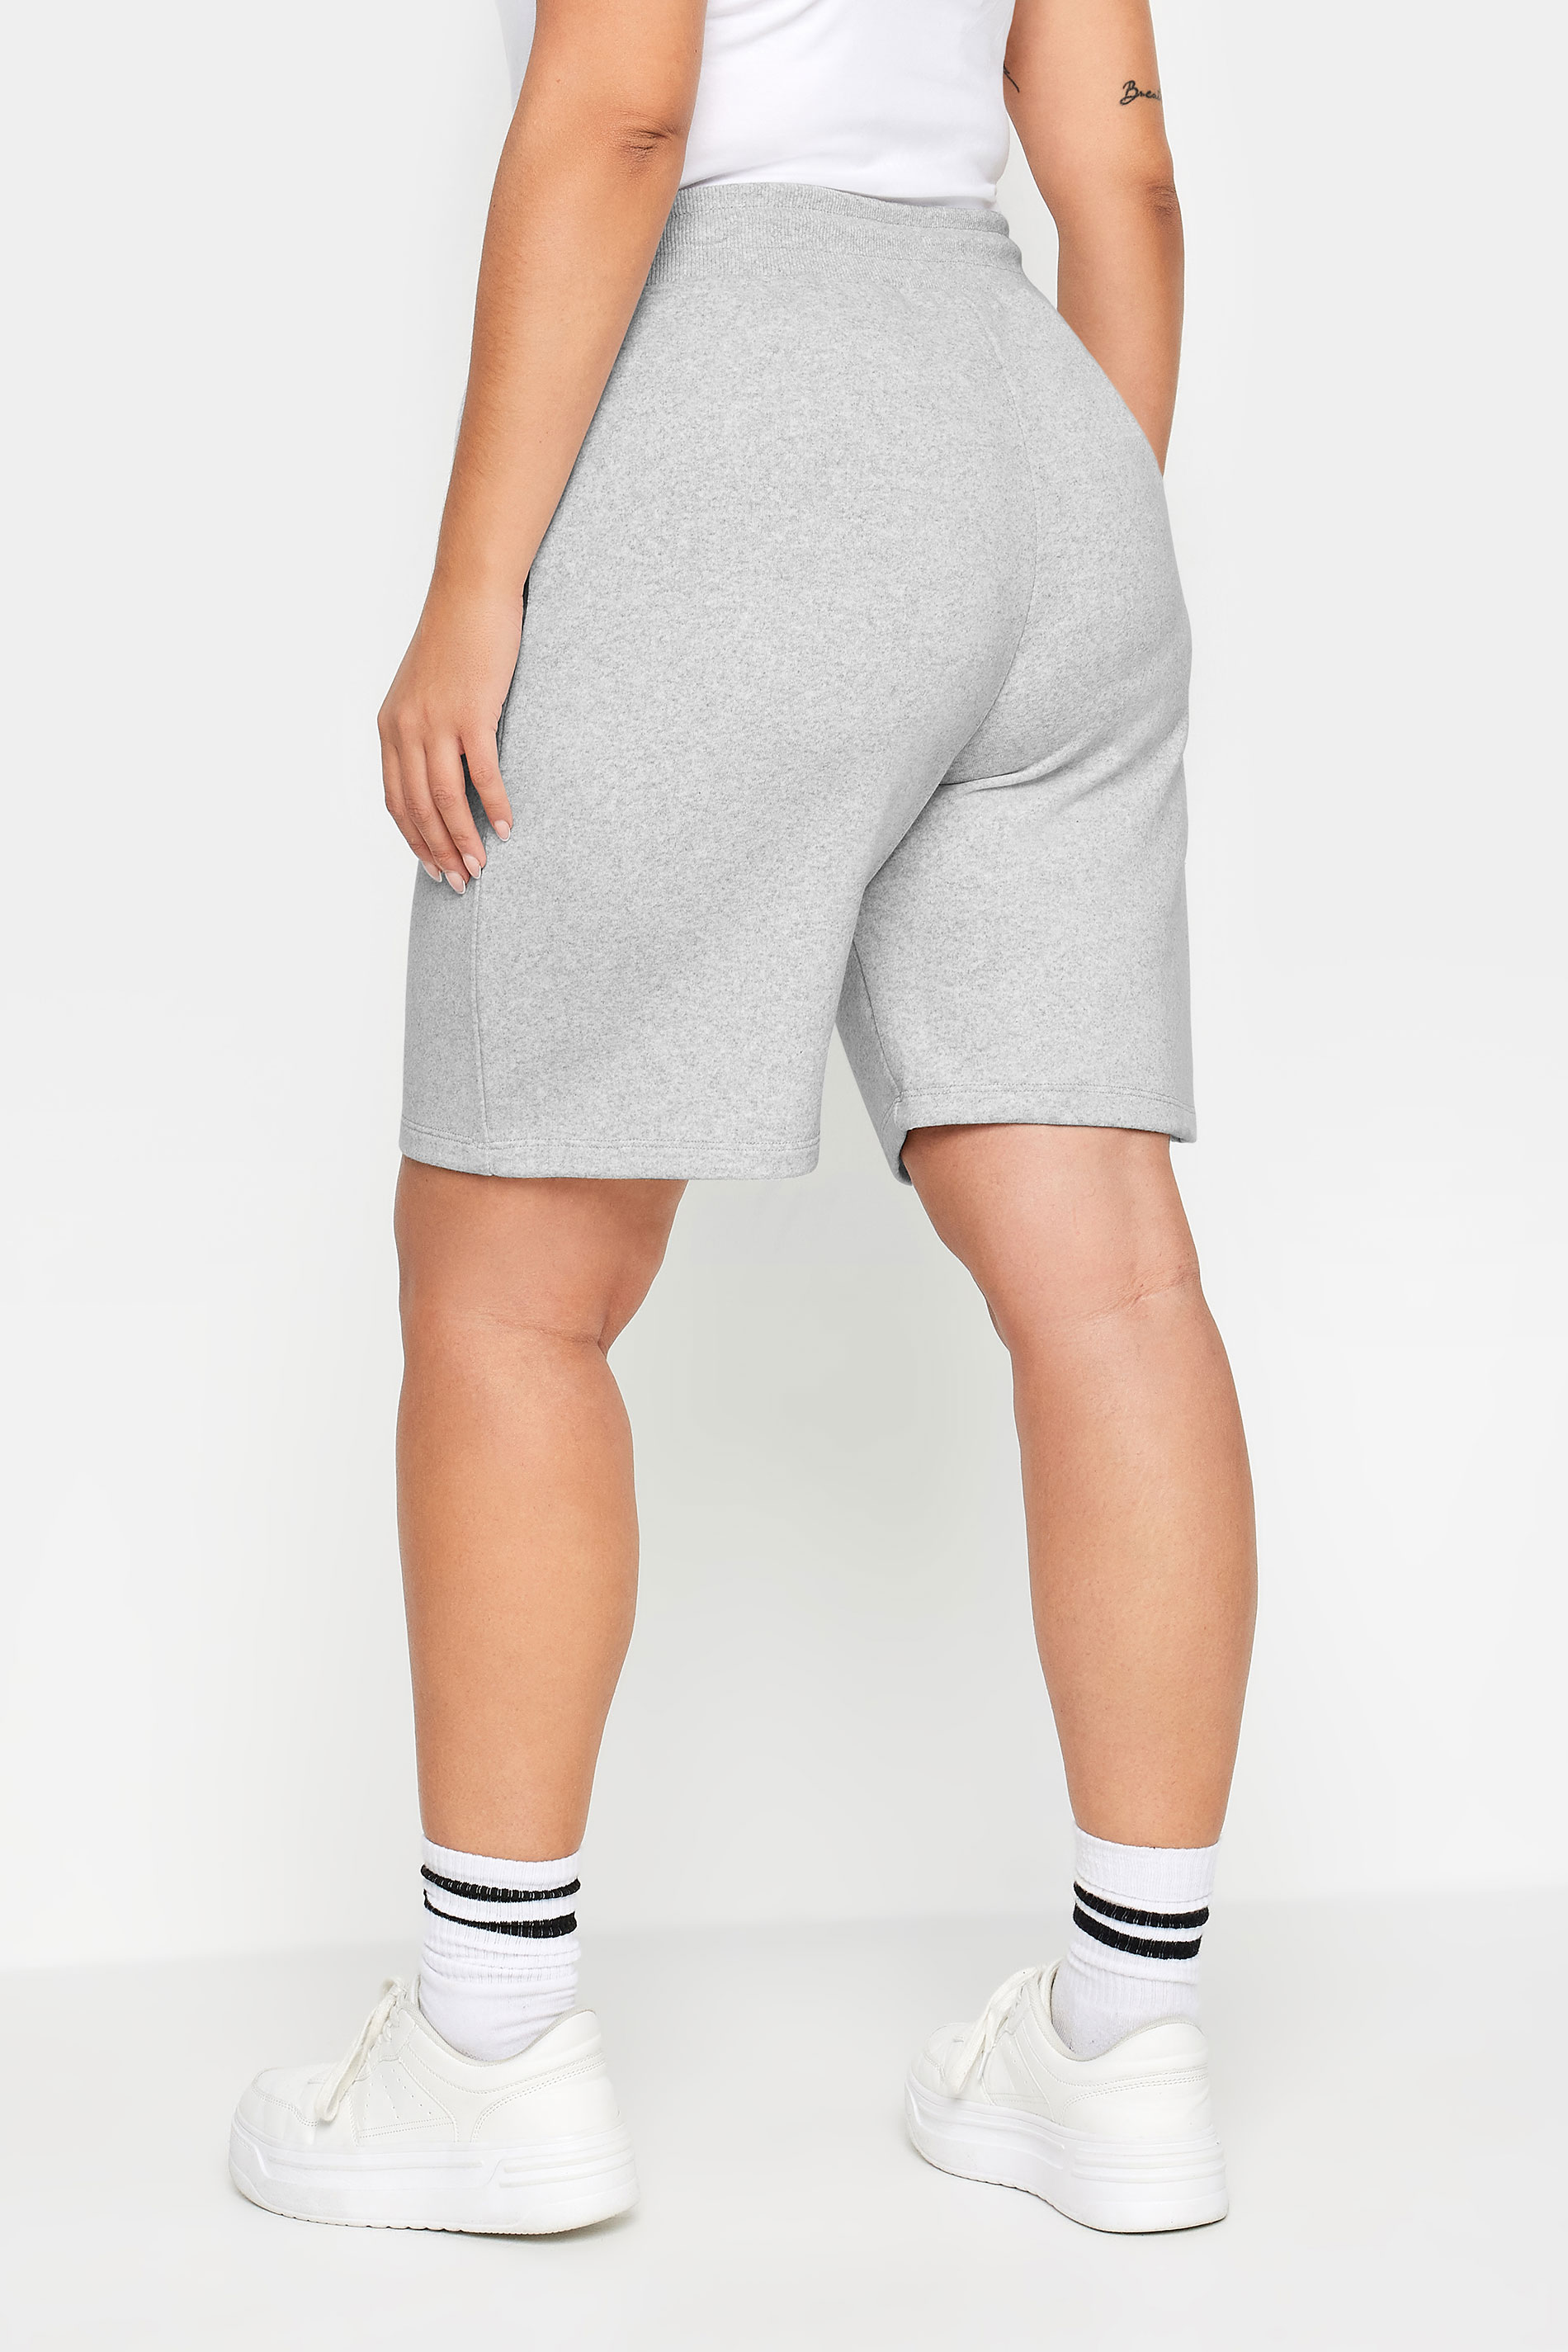 YOURS Plus Size Light Grey Elasticated Jogger Shorts | Yours Clothing 3